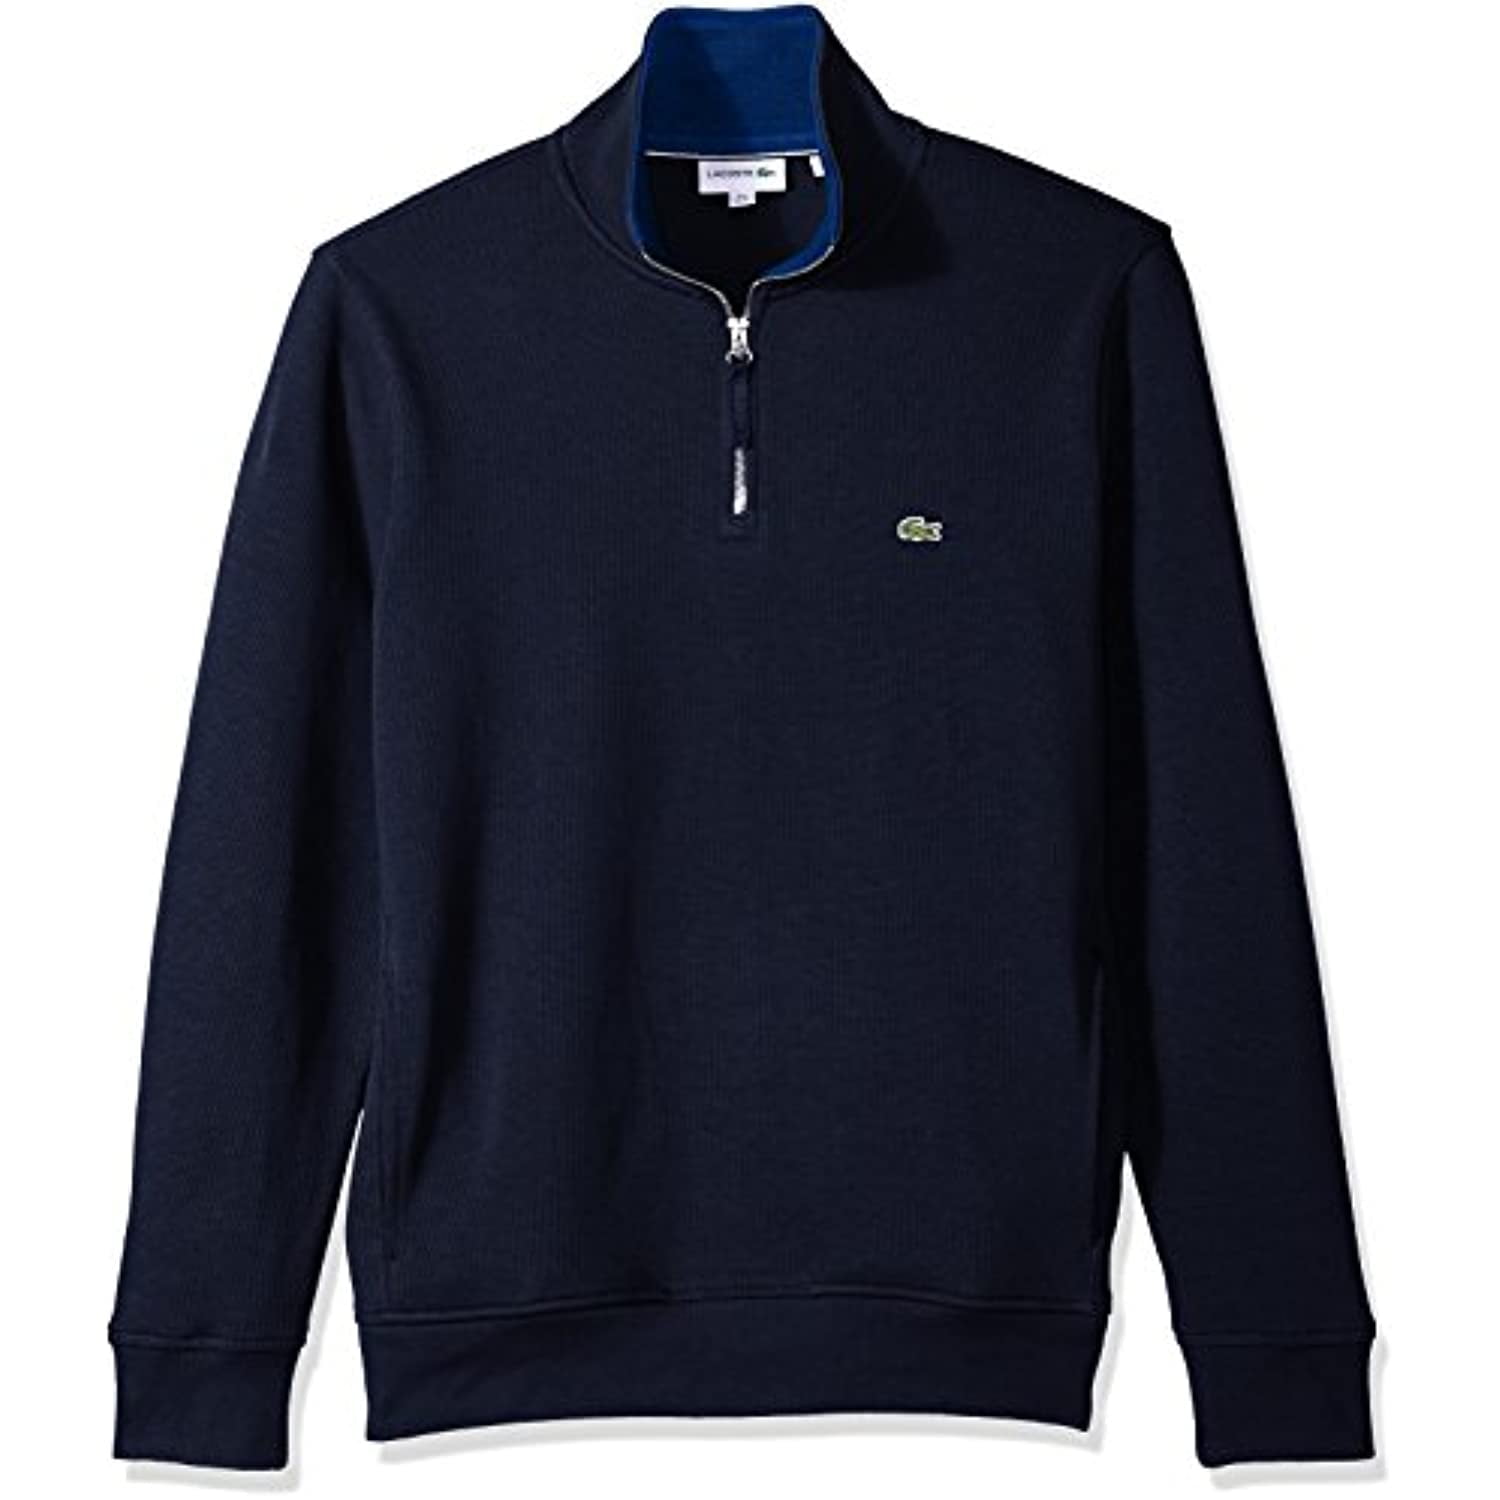 Navy Sweatshirt, Men\'s Lacoste Small Blue/Marino, Cotele Sleeve Zip Long Interlock SH3293, 1/4